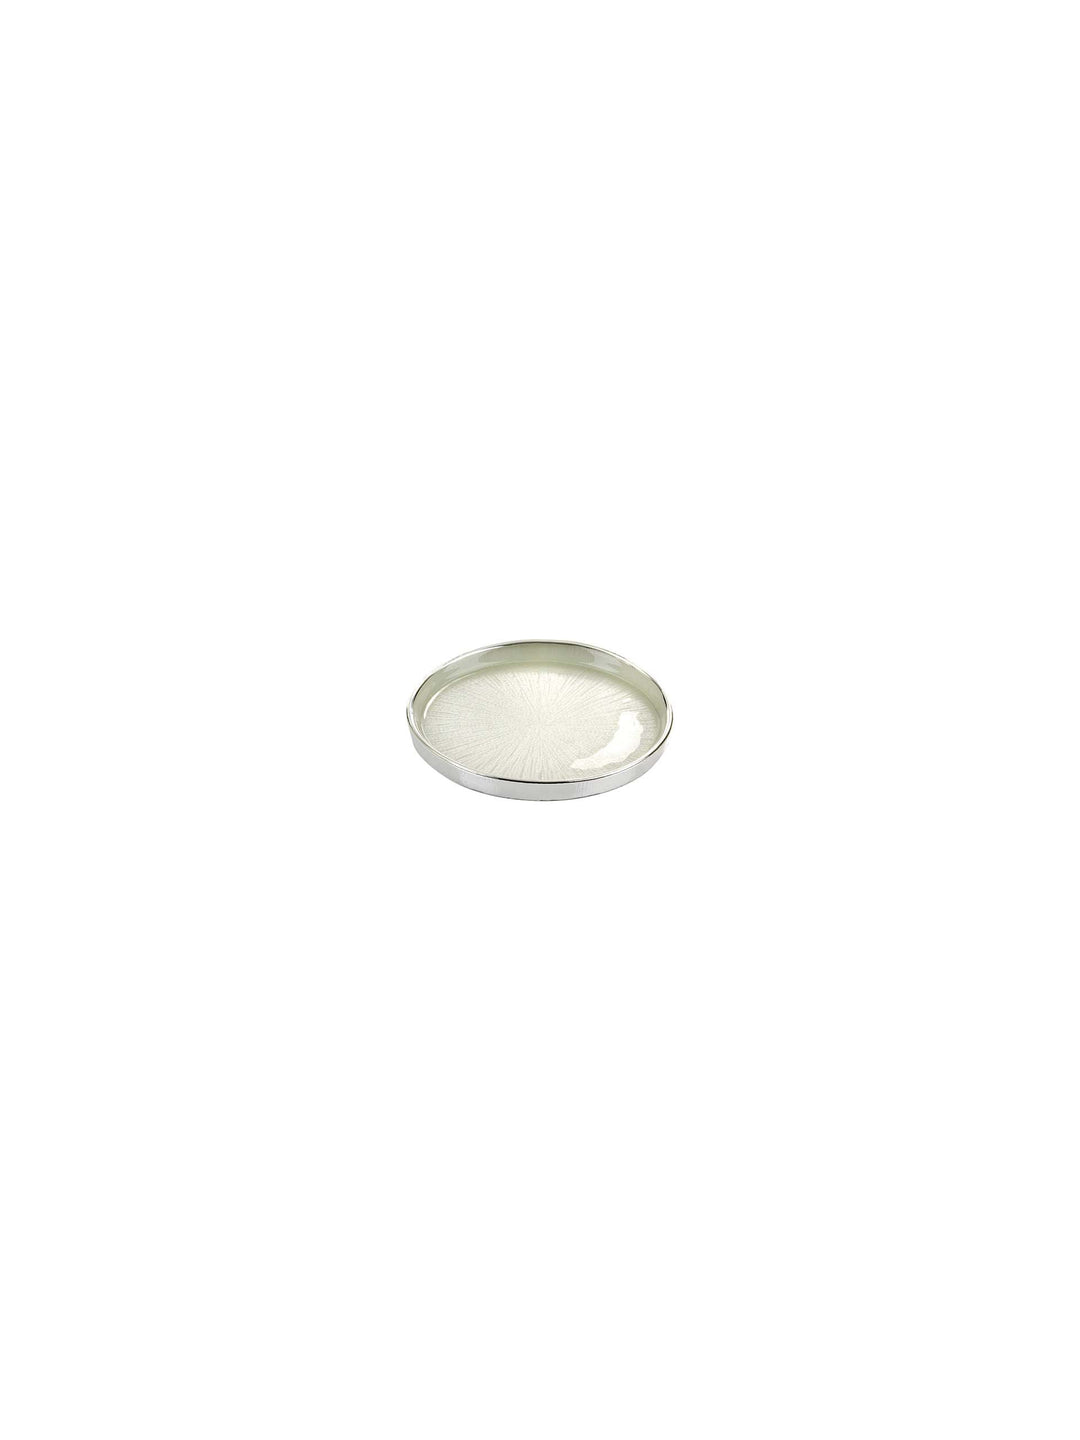 Argenesi Tray Sottobiciere Luce D. 12 cm White Glass Pearl Silver 0.02868